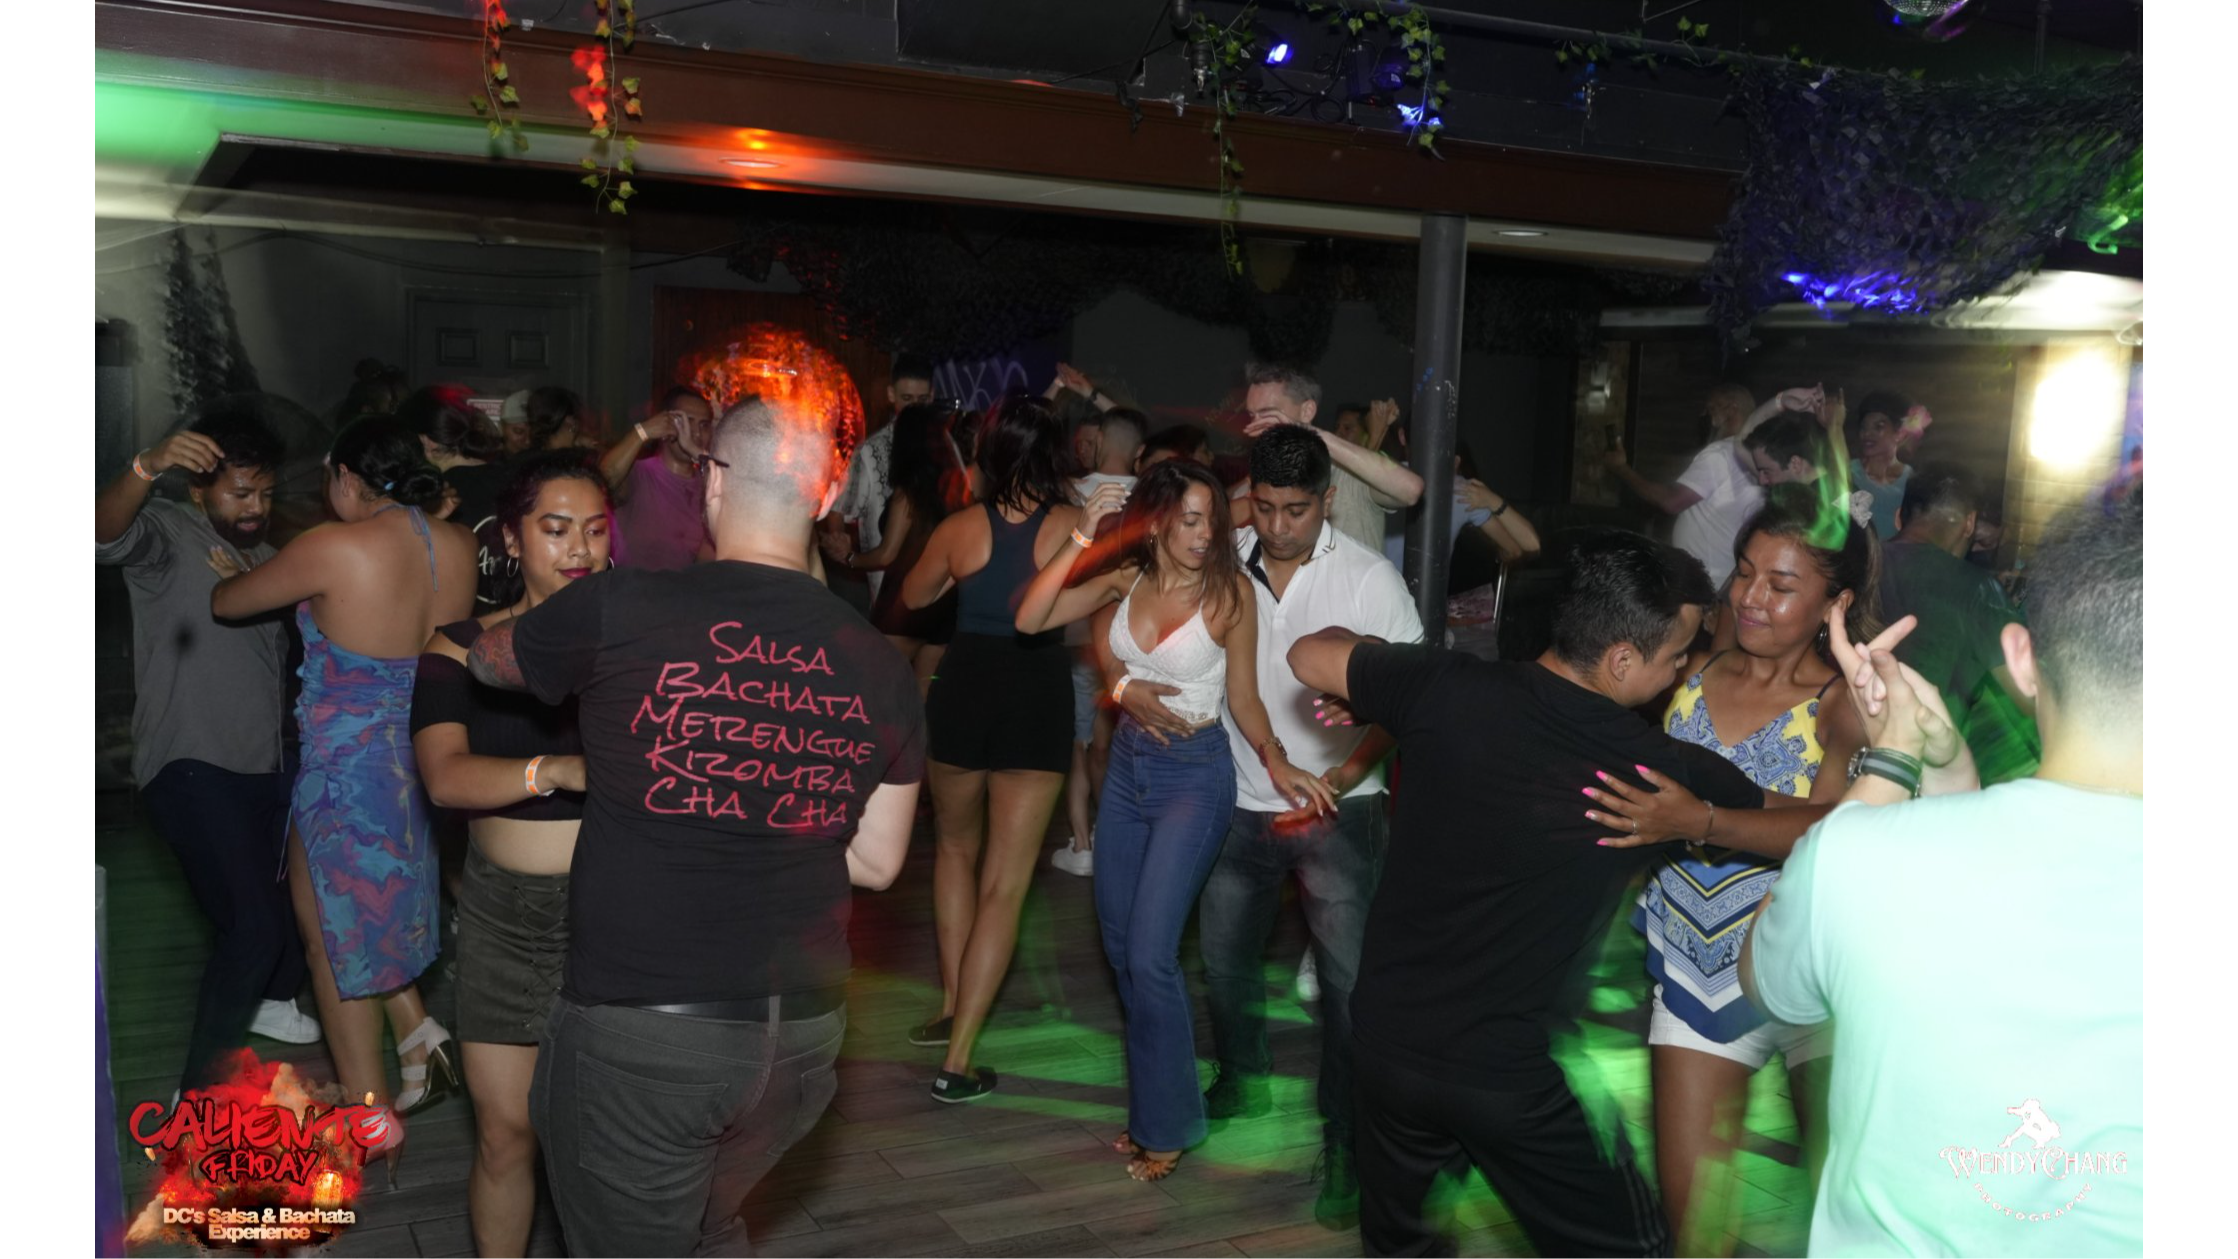 Photo for Caliente Friday Gabriela Little Black Dress B-Day + Anna Navarro Spain DJs BAD Frankie & Philly Boy on ViewStub